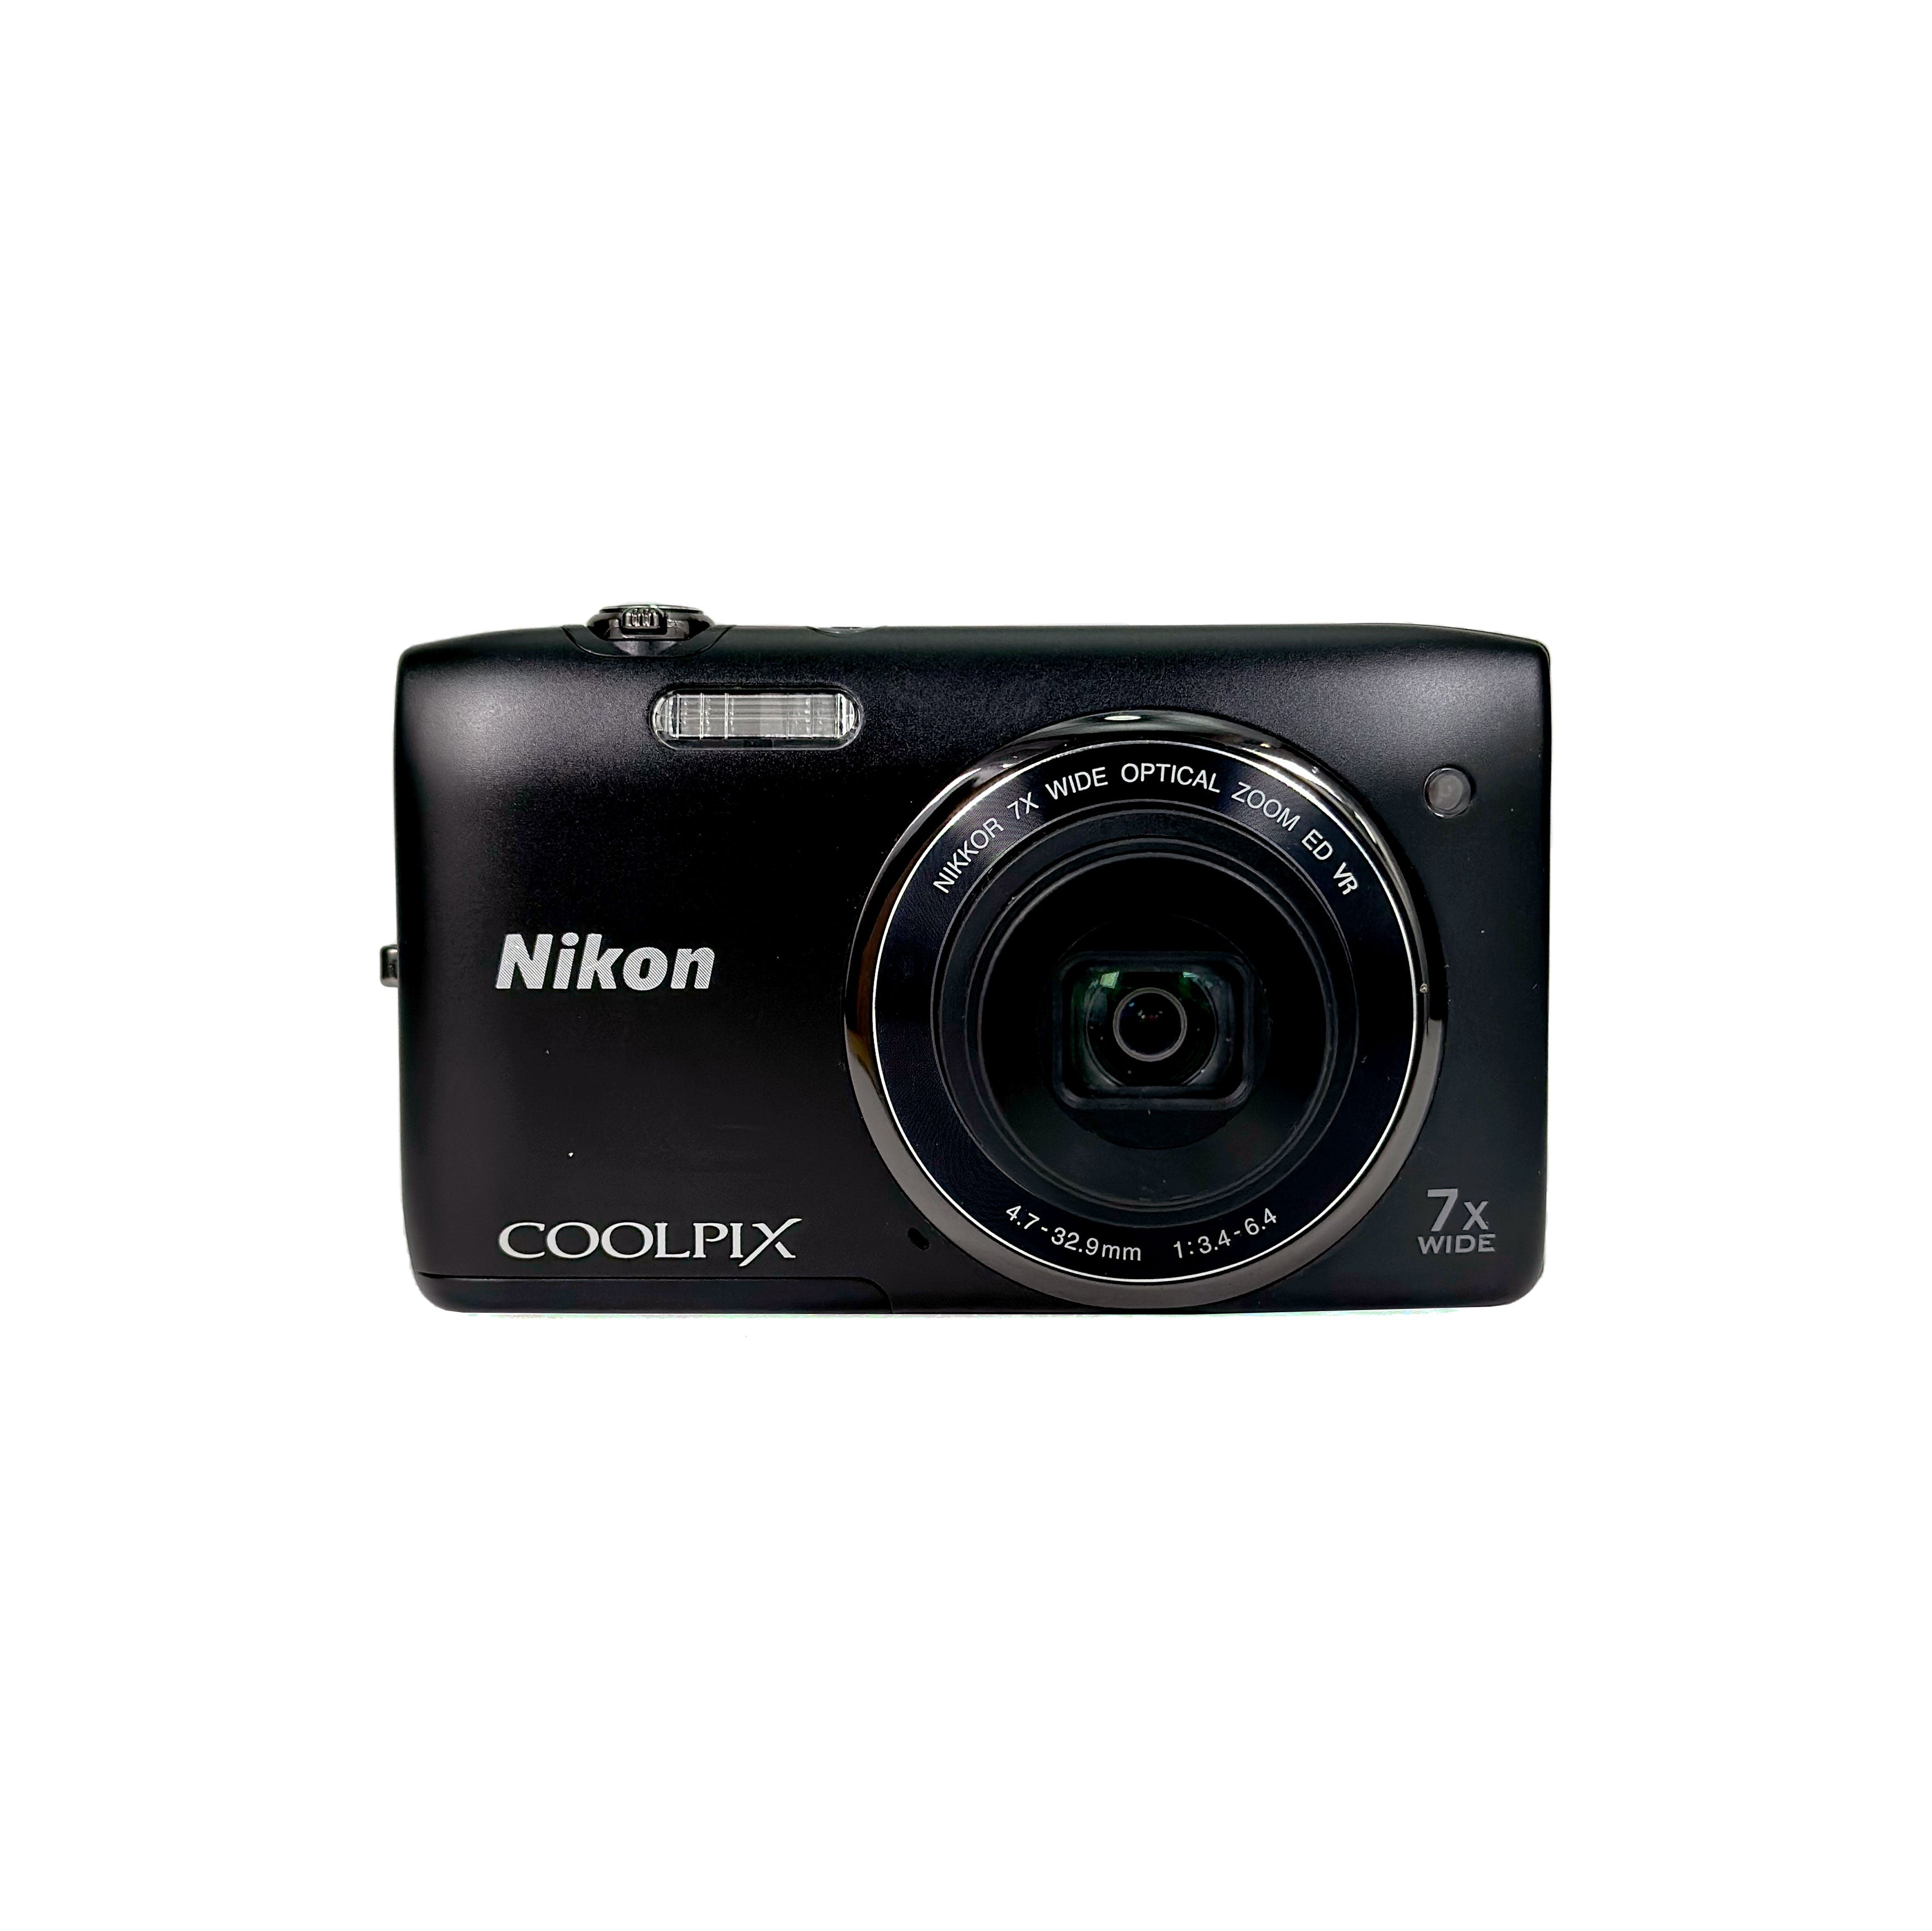 Nikon Coolpix S3500 Digital Compact